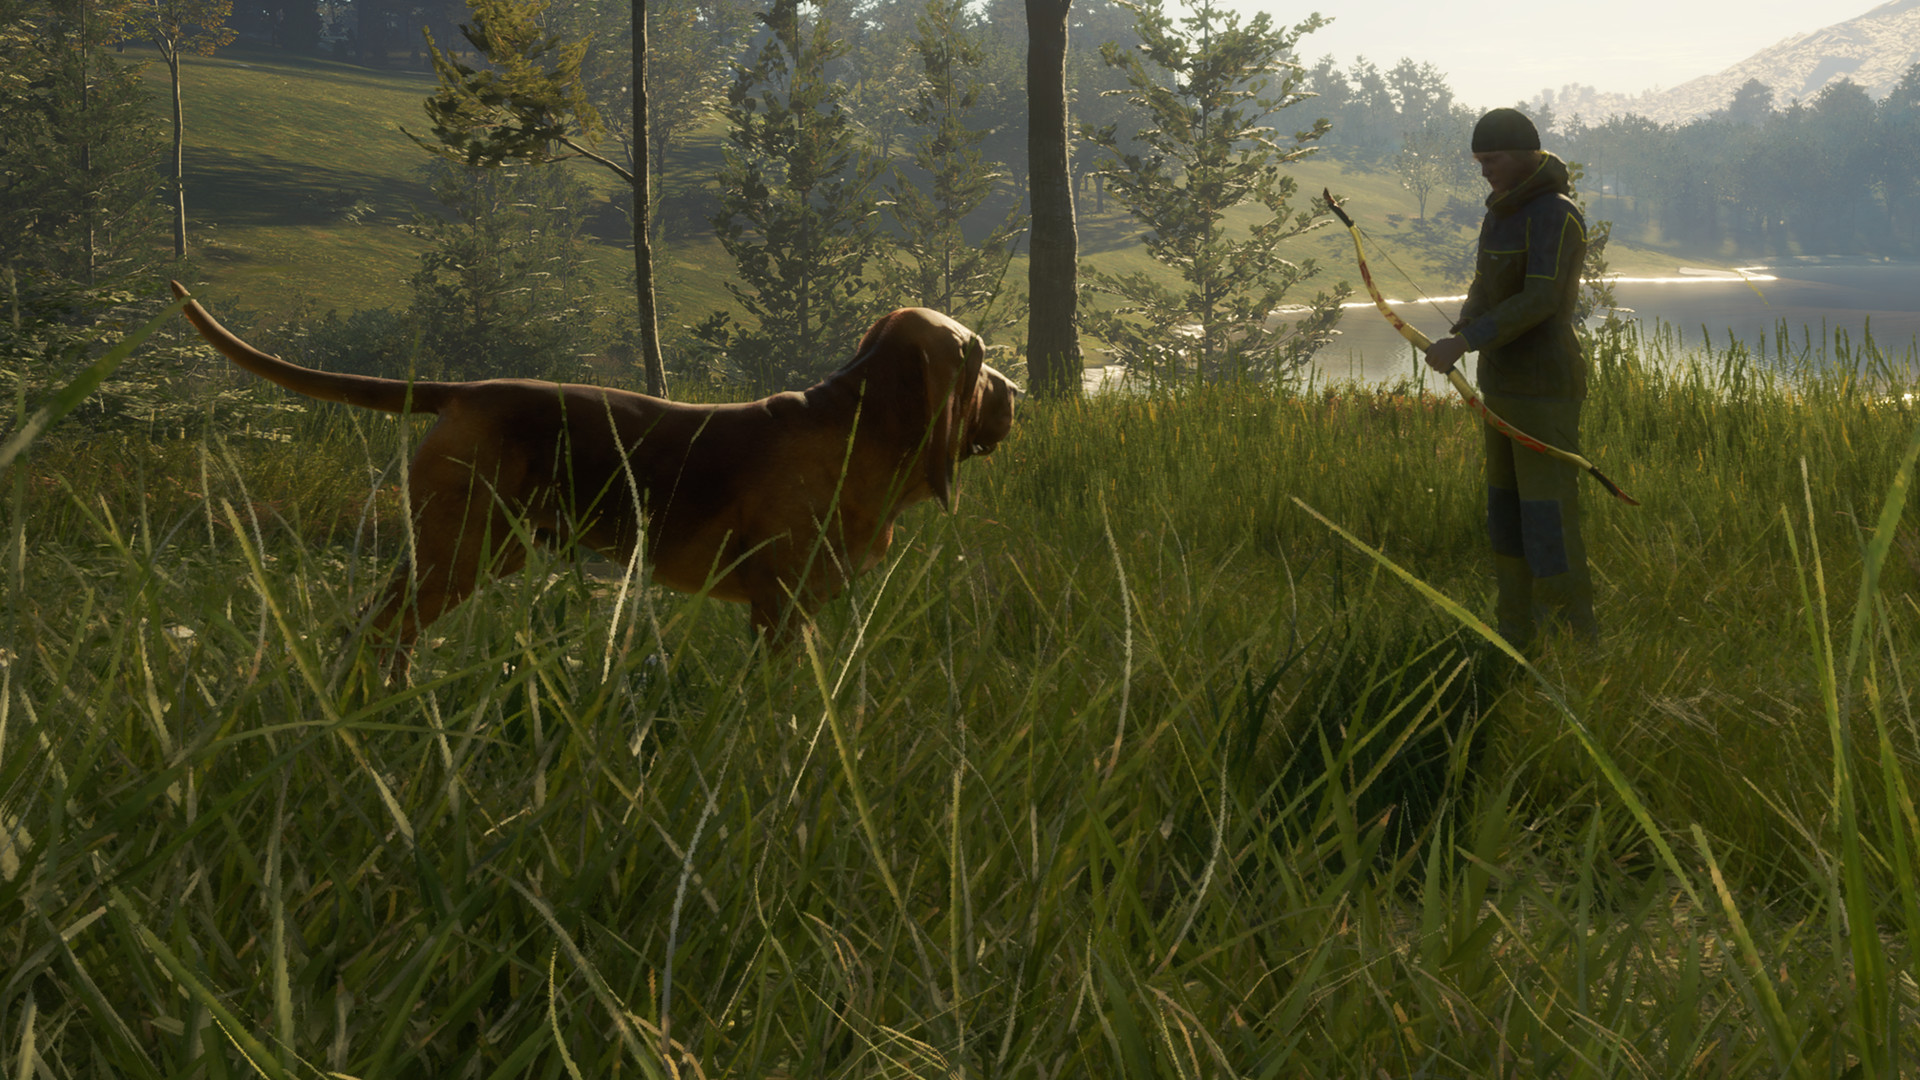 TheHunter: Call Of The Wild - Bloodhound DLC Steam Altergift